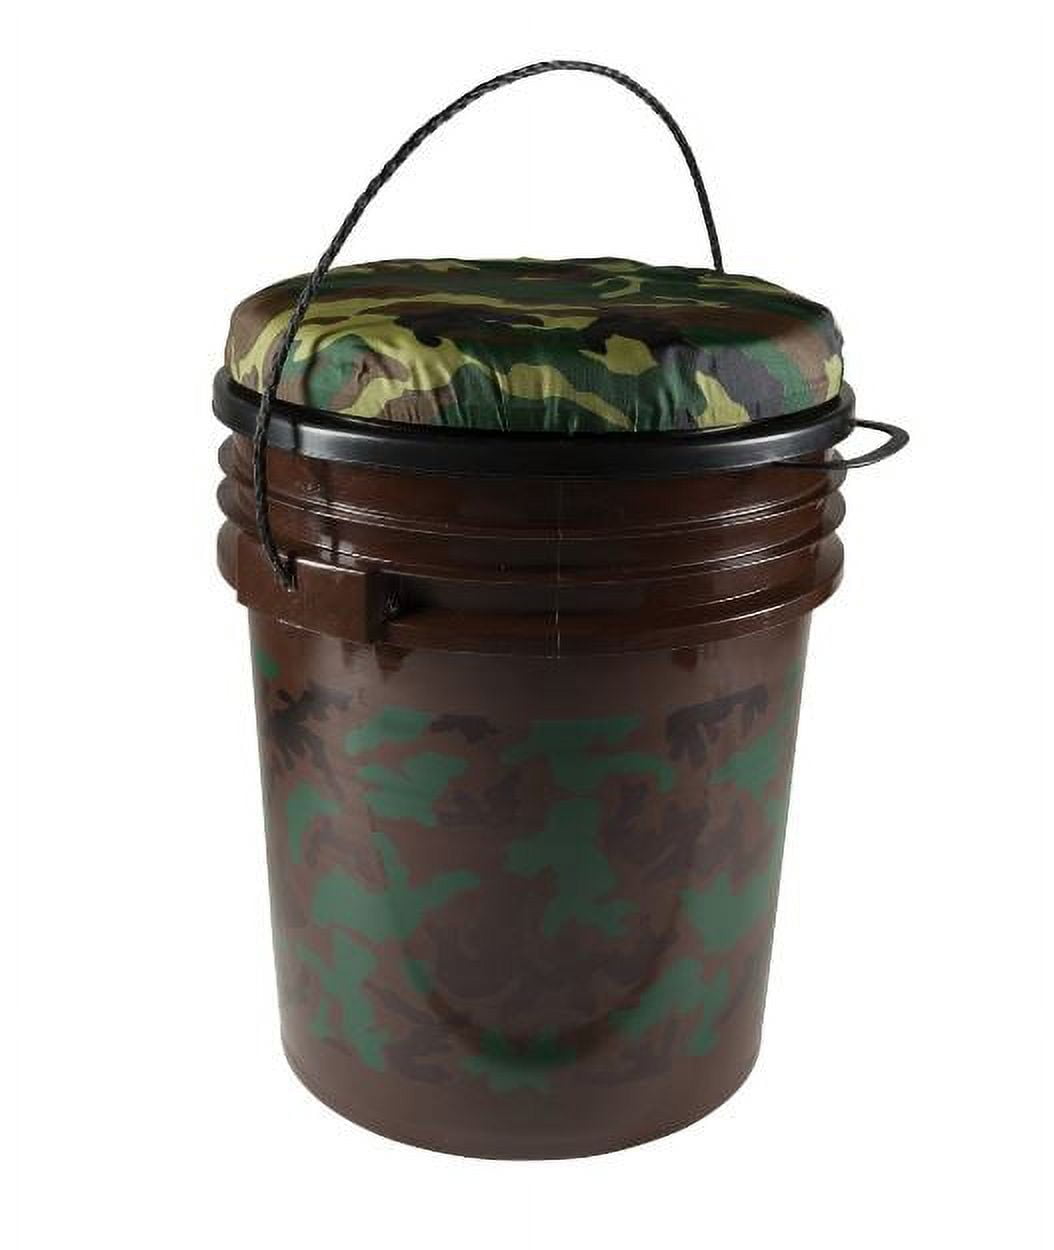 Bucket Seat 5 Gallon Bucket Lid Seat Waterproof Bucket Swivel Lid Cushion  With Camouflage Pattern For Hunting Fishing Gardening - Fishing Tools -  AliExpress